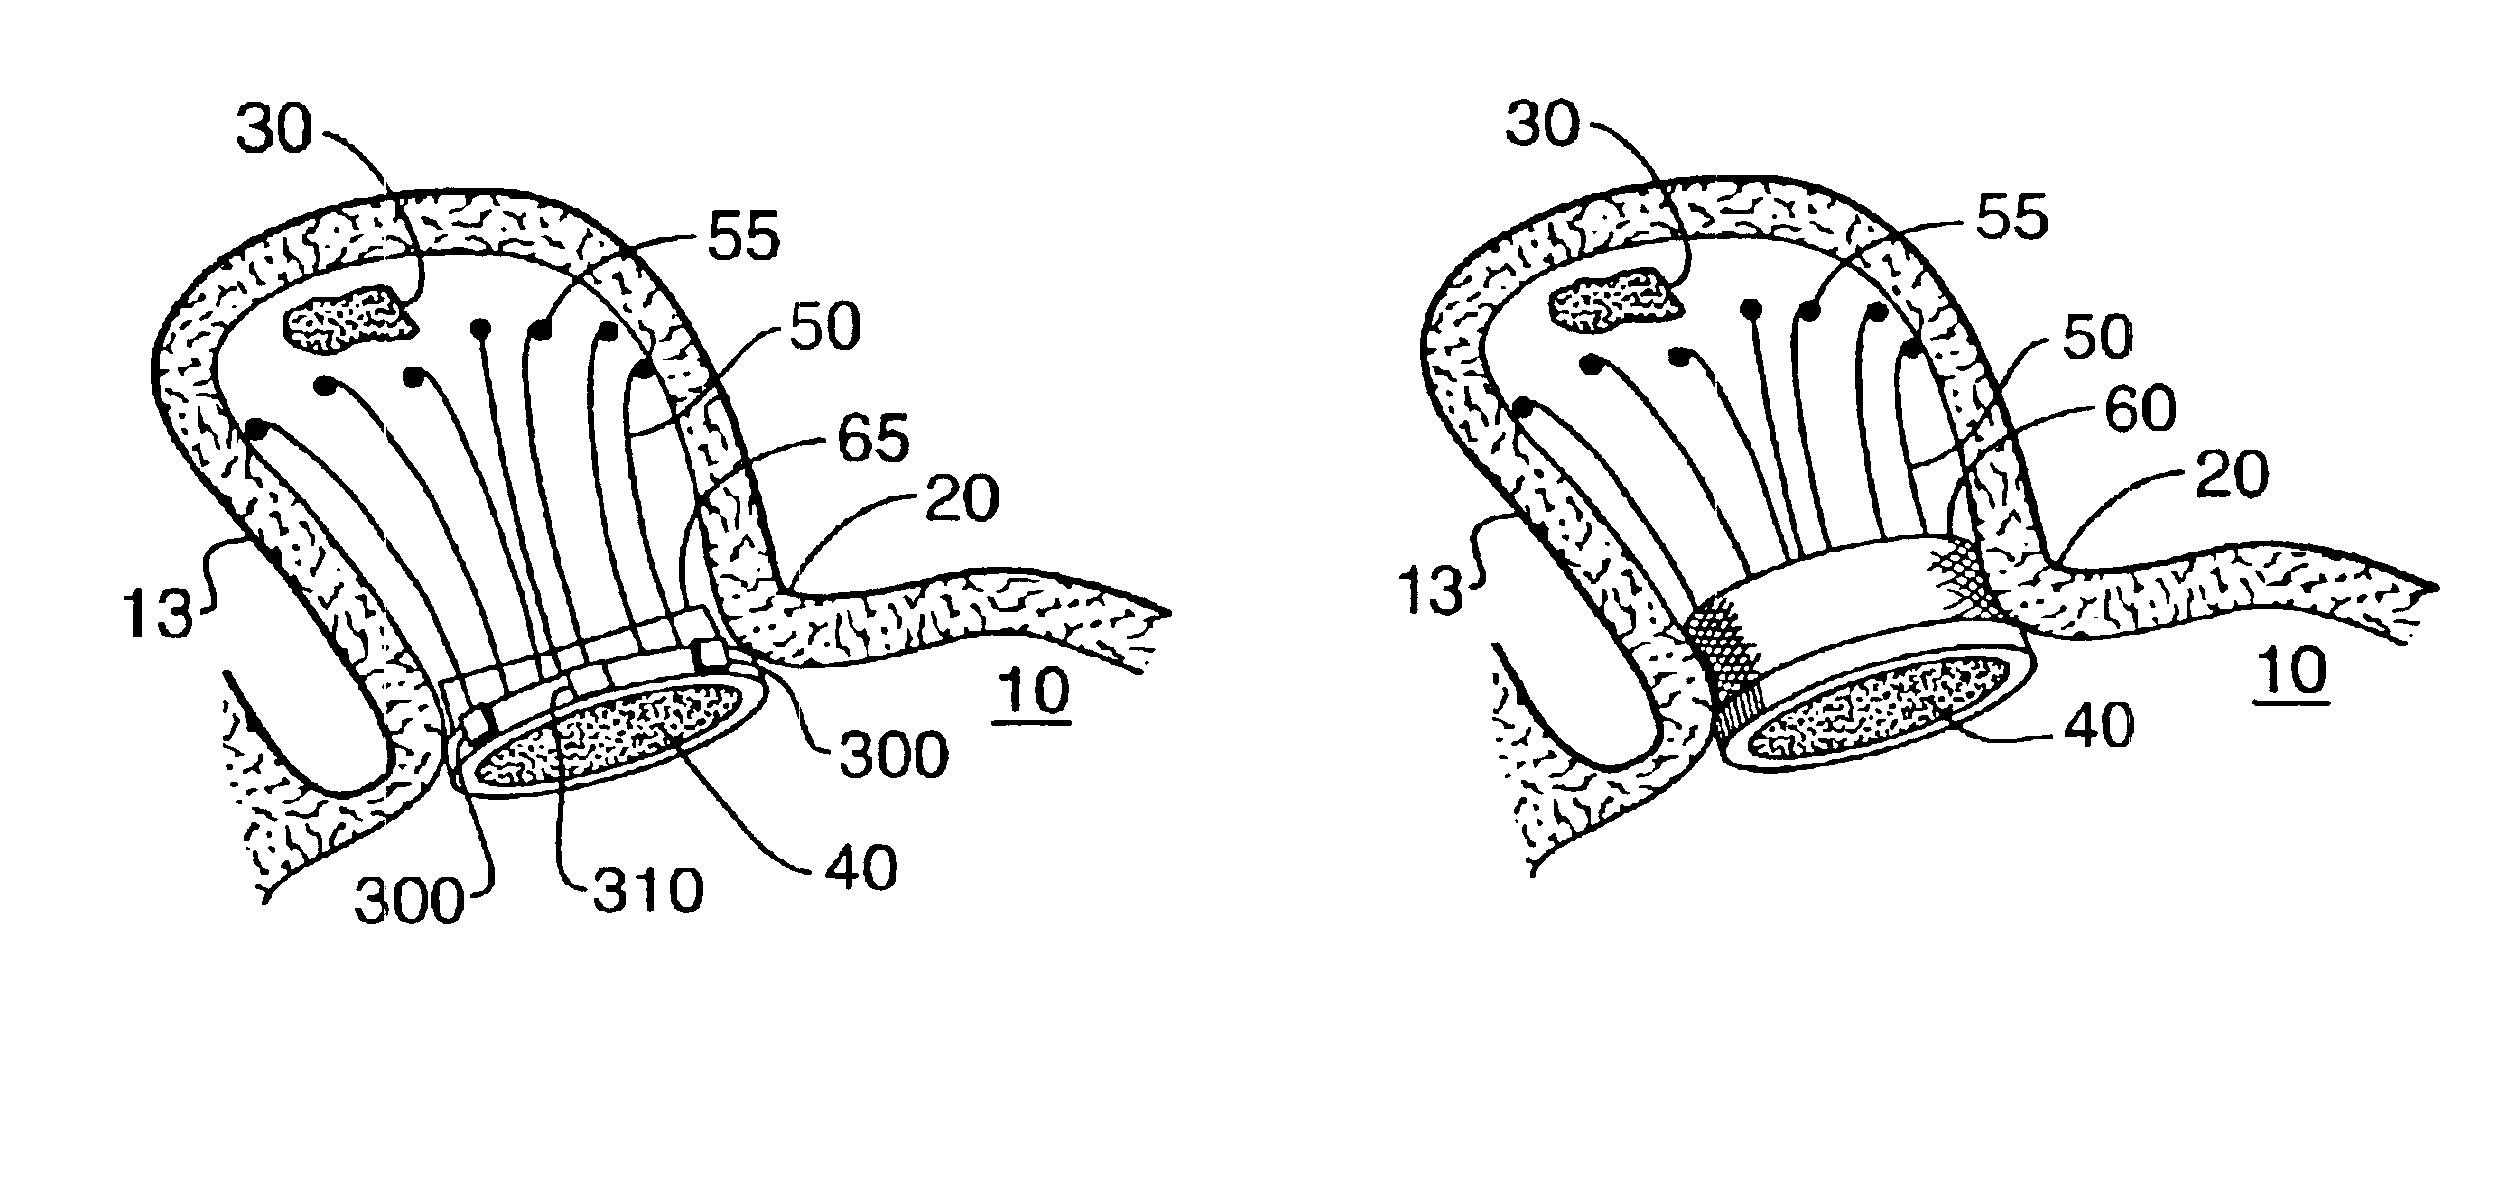 Barrier device for ostium of left atrial appendage